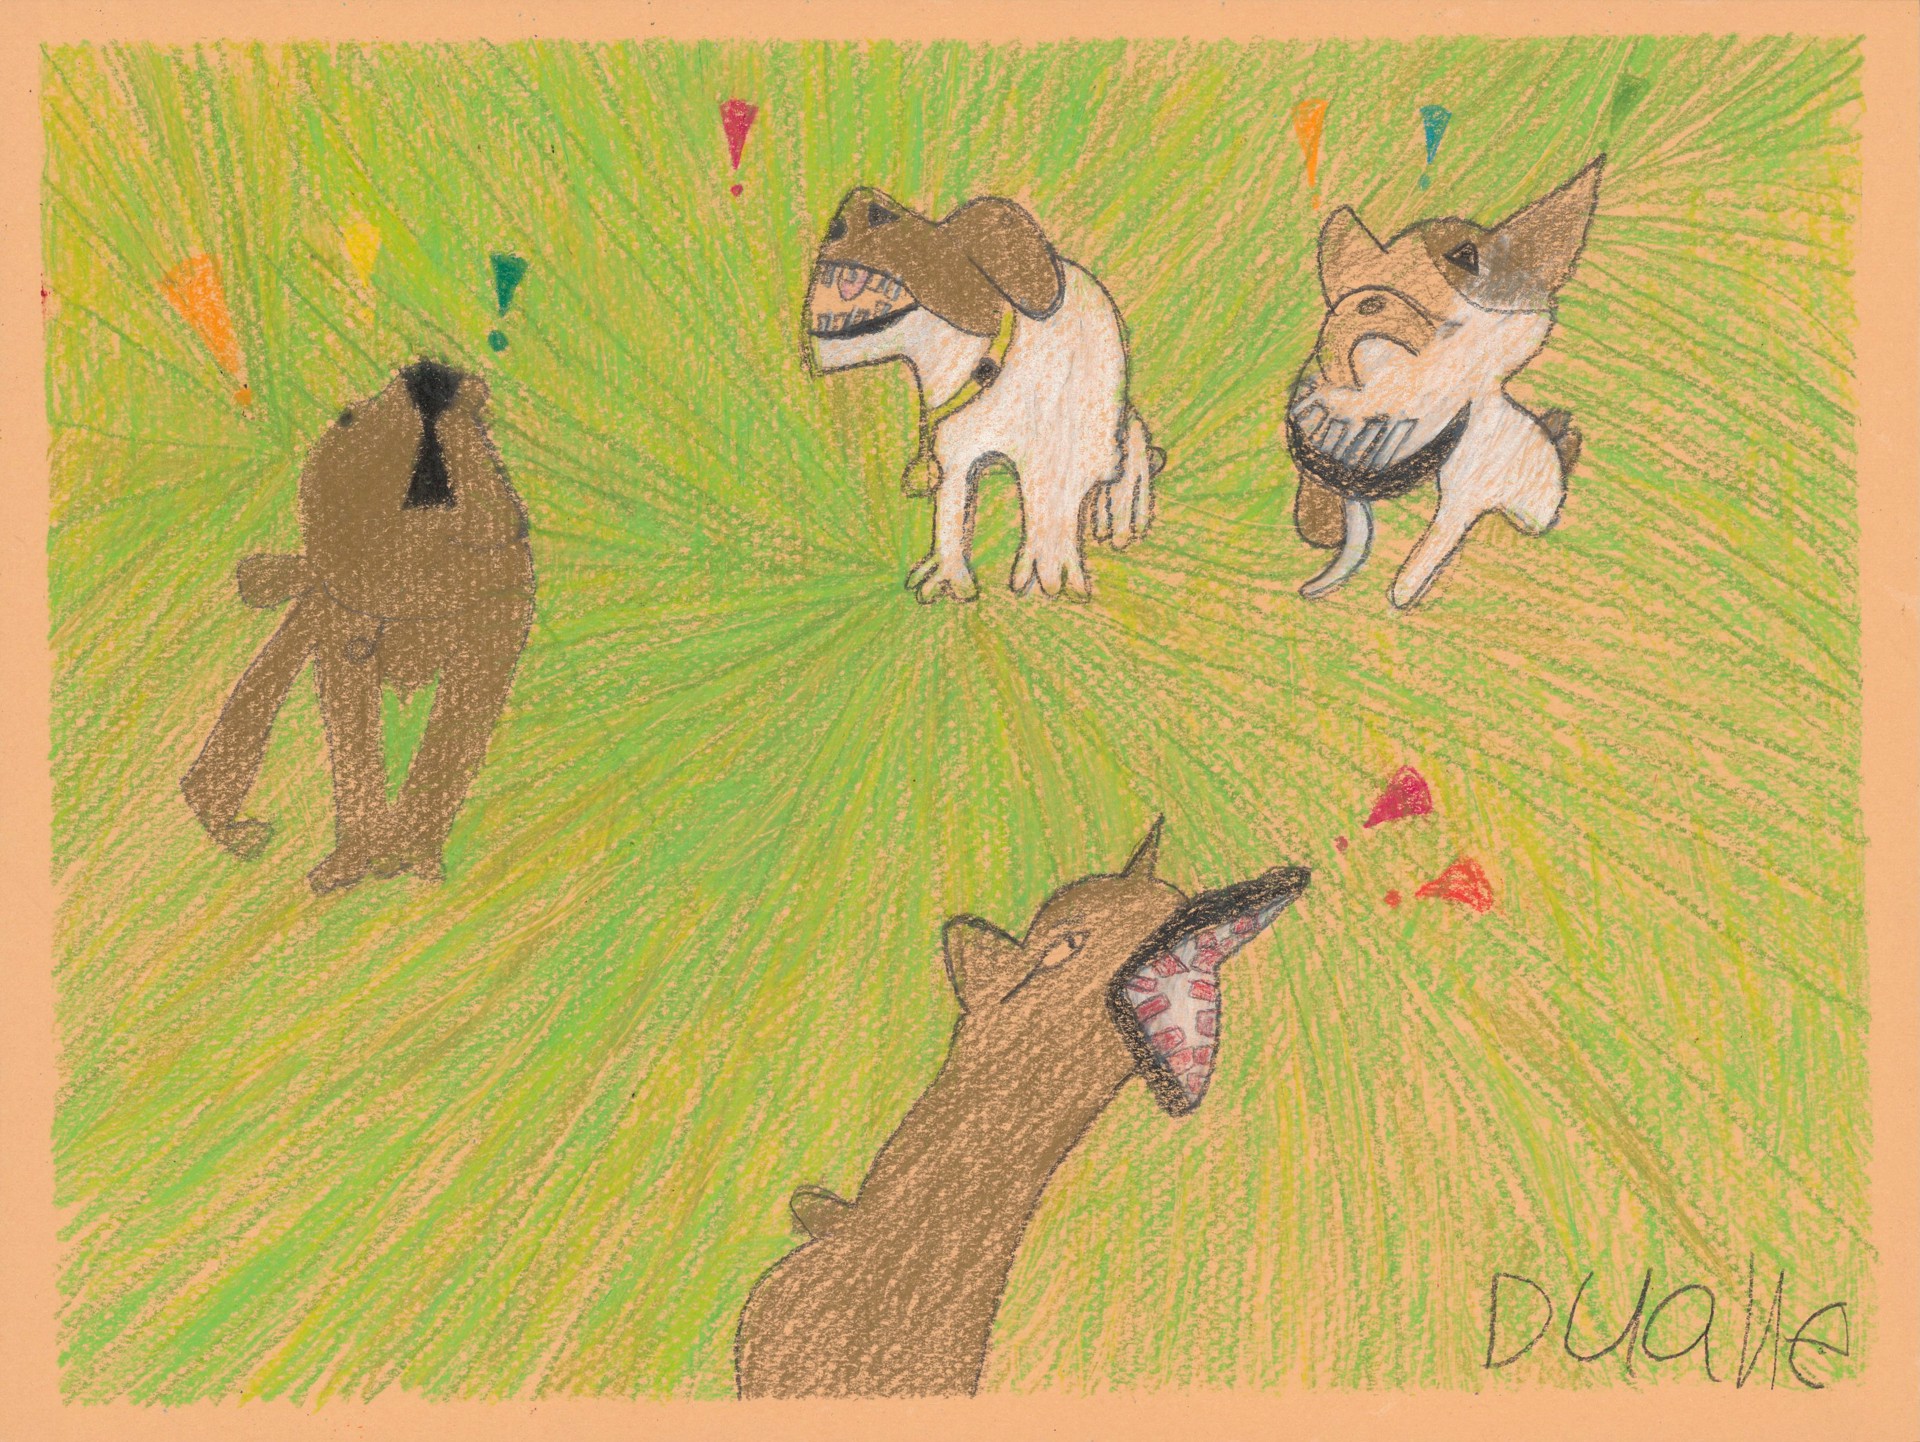 Barking Dogs by Duane Blacksheare-Staton